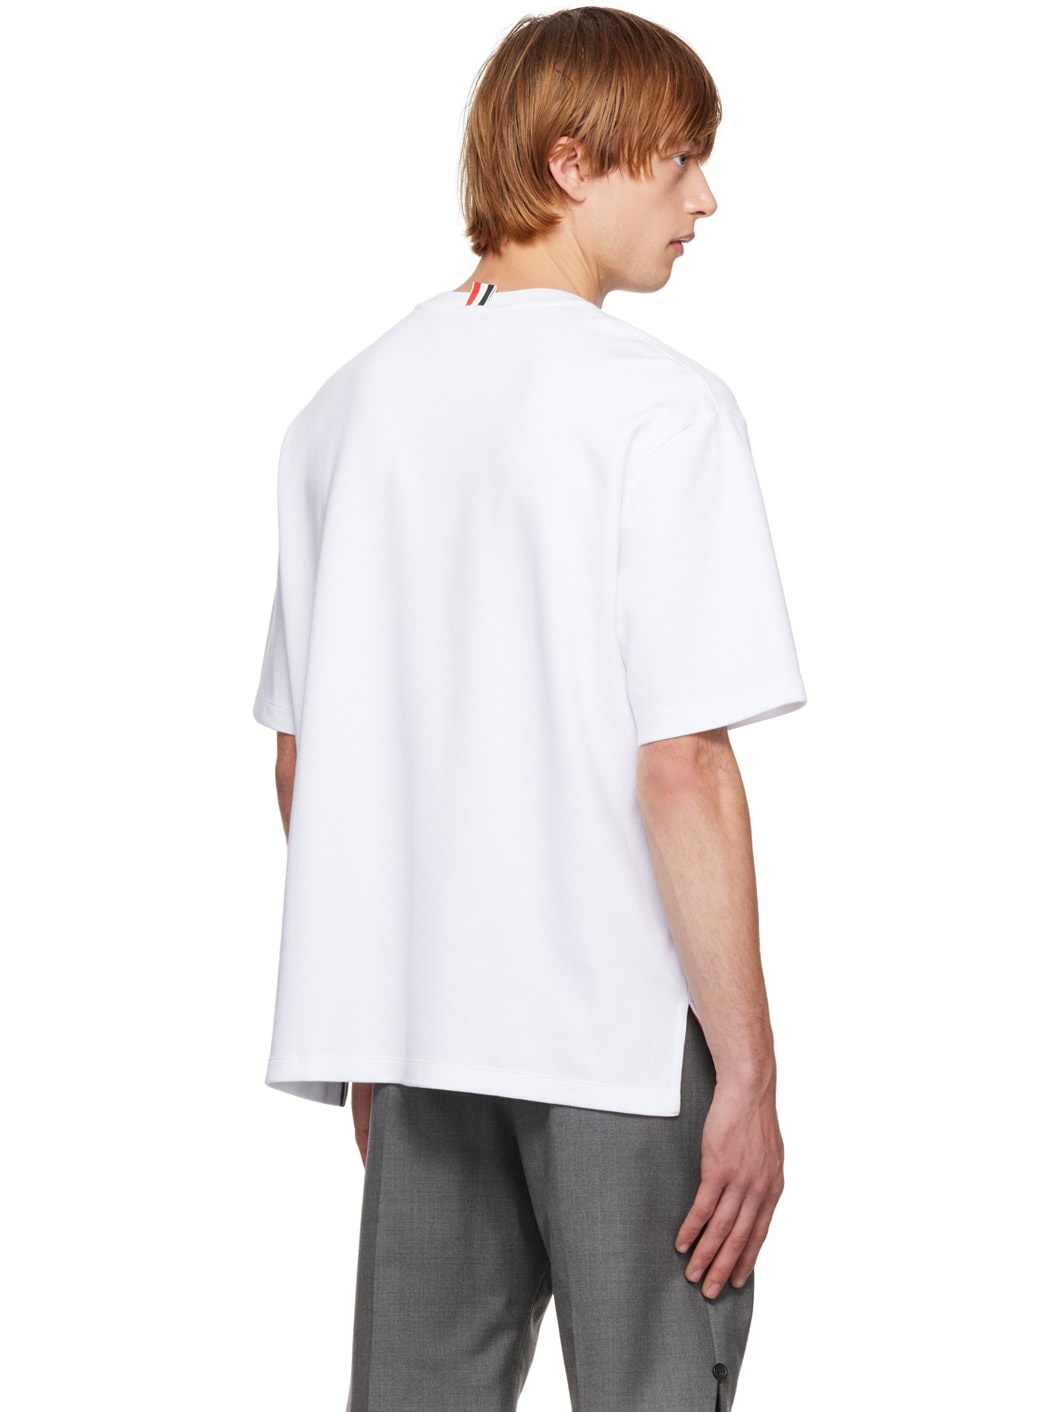 White Pocket T-Shirt - 3